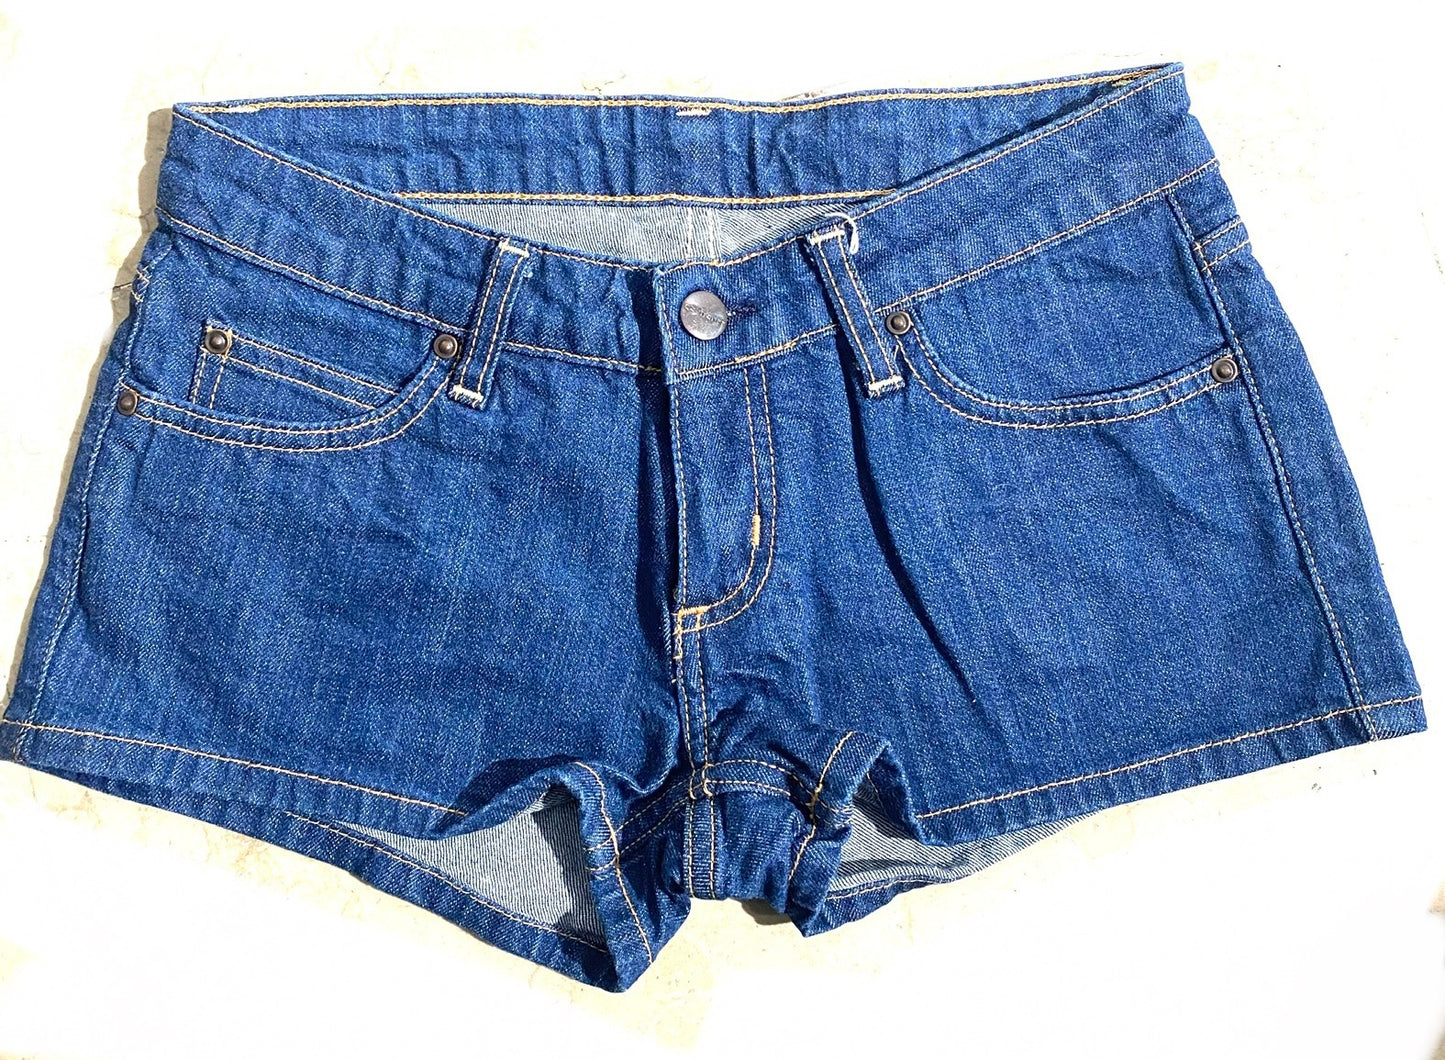 Carharrt W’ Texas shorts indigo denim sz 26 mint